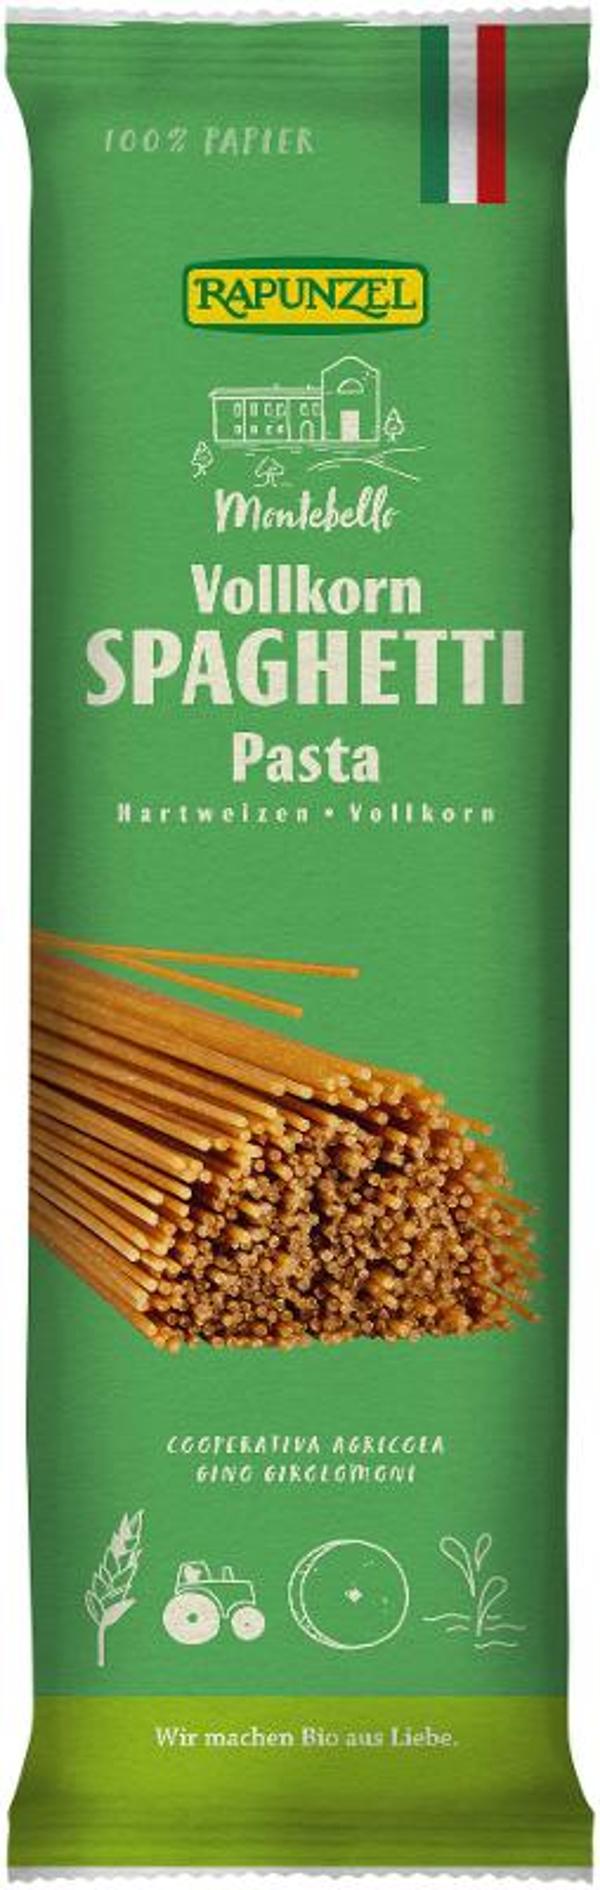 Produktfoto zu Spaghetti (Vollkorn)